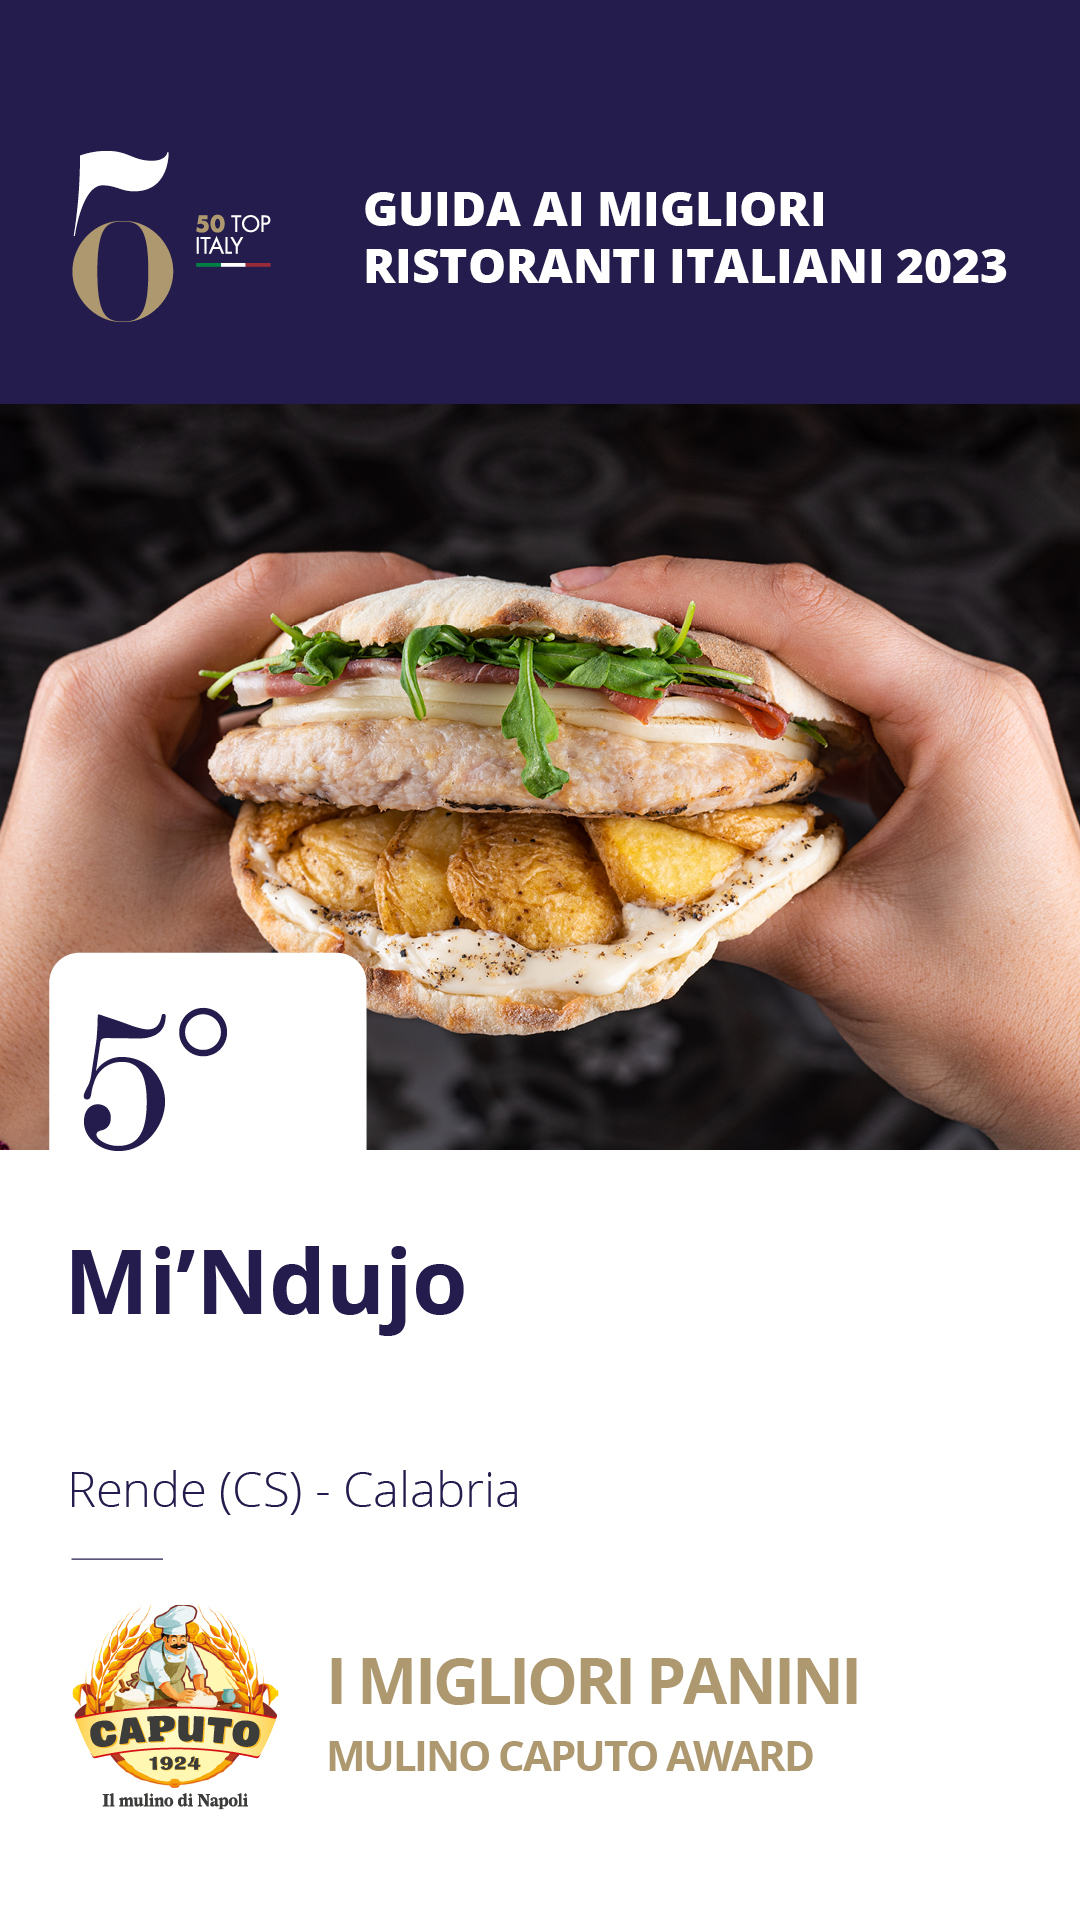 5 - Mi'Ndujo - Rende (CS), Calabria